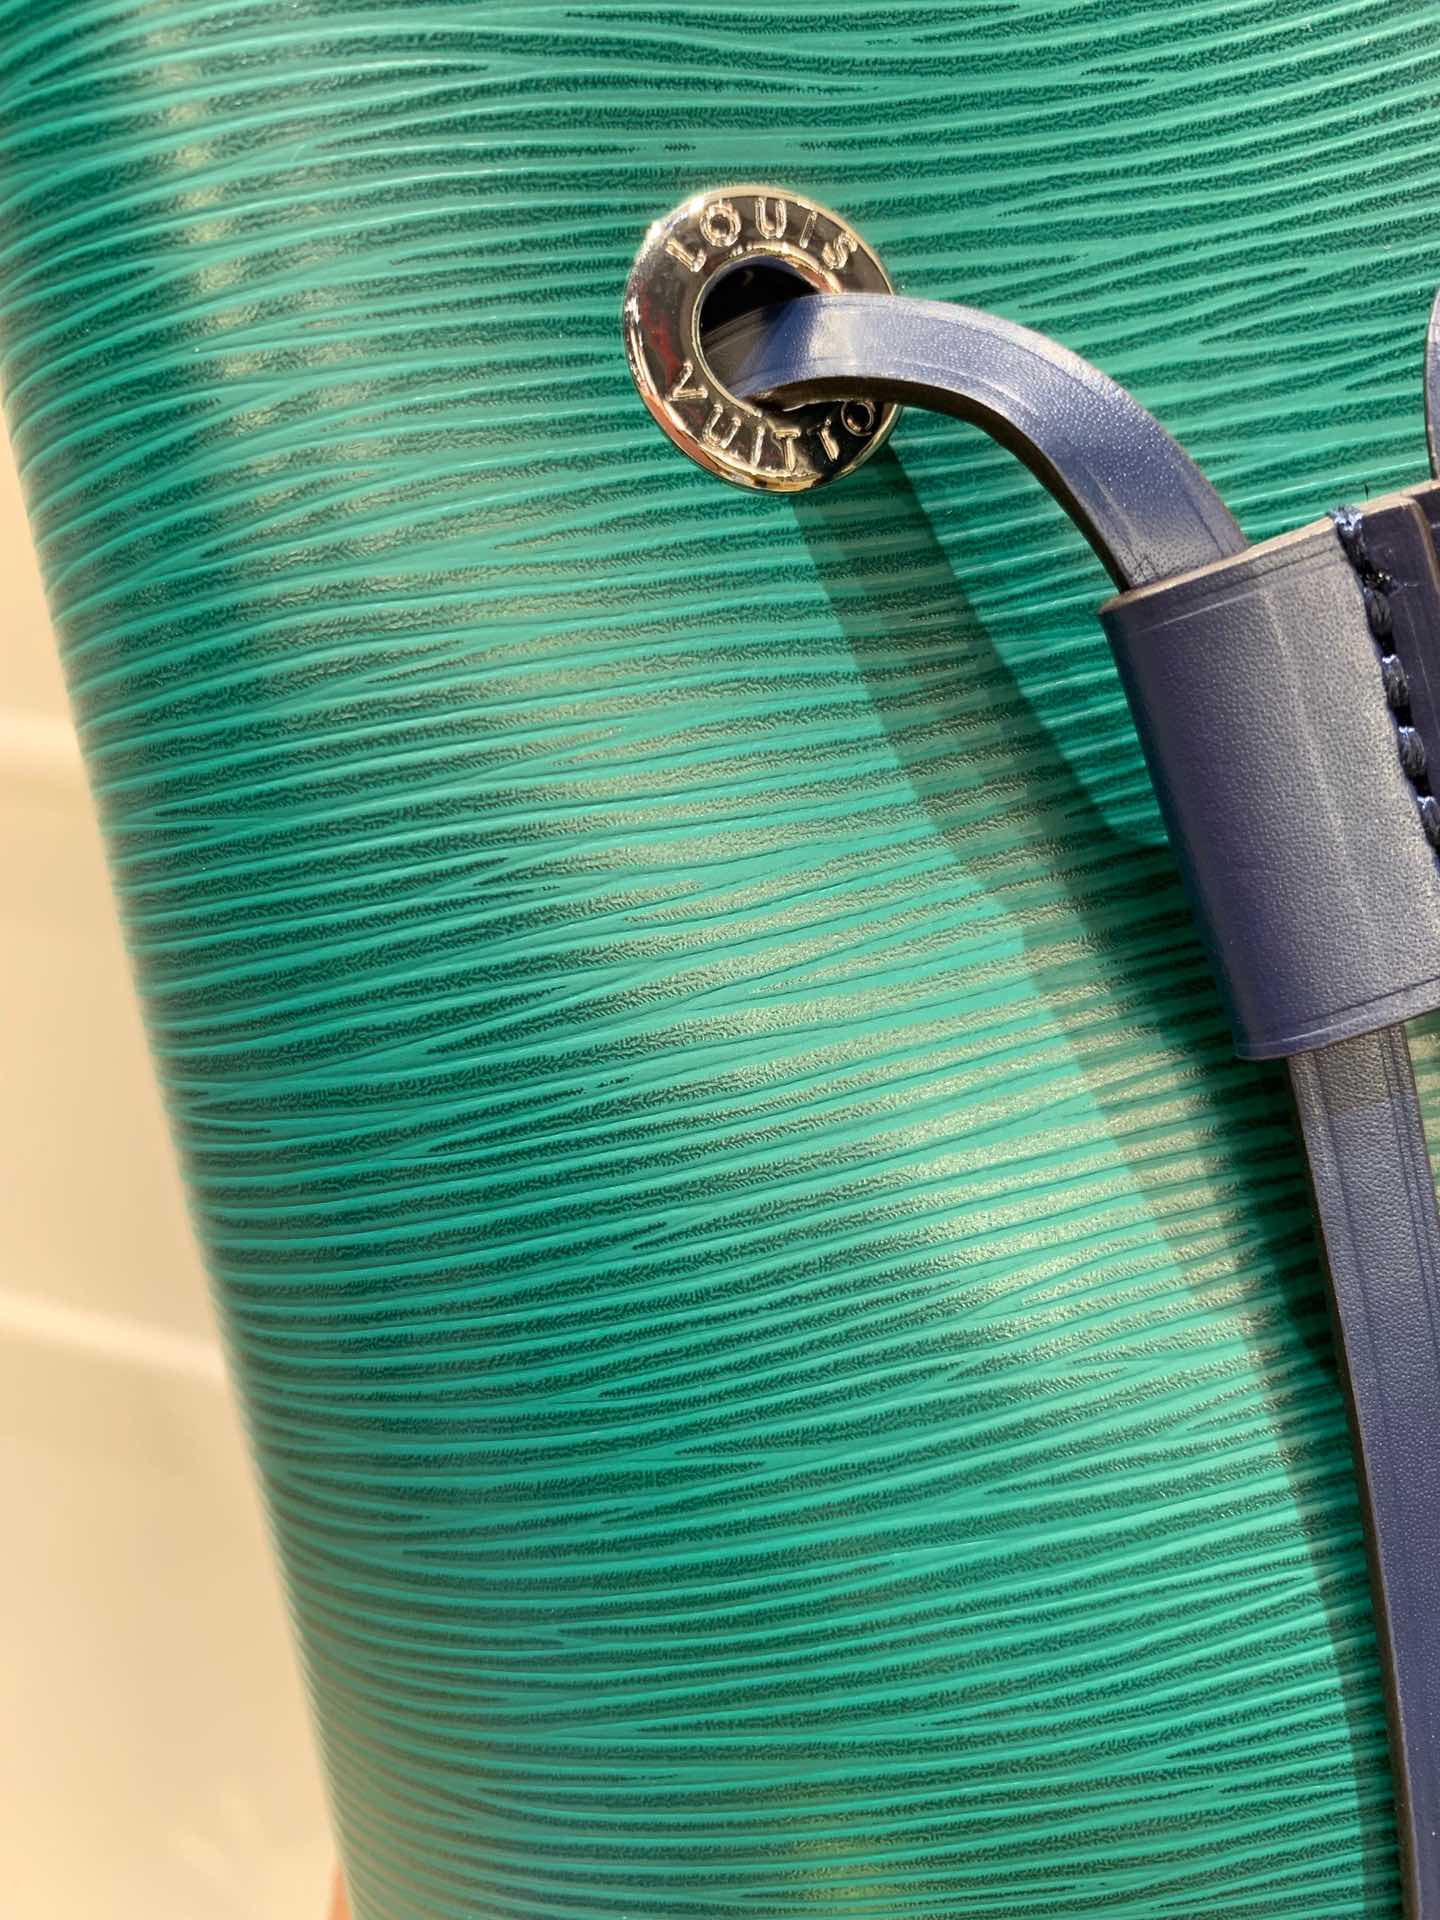 LV官网 水波纹桶包小号44022 设计很独特 颜色搭配大气 手提短袋可以拆卸